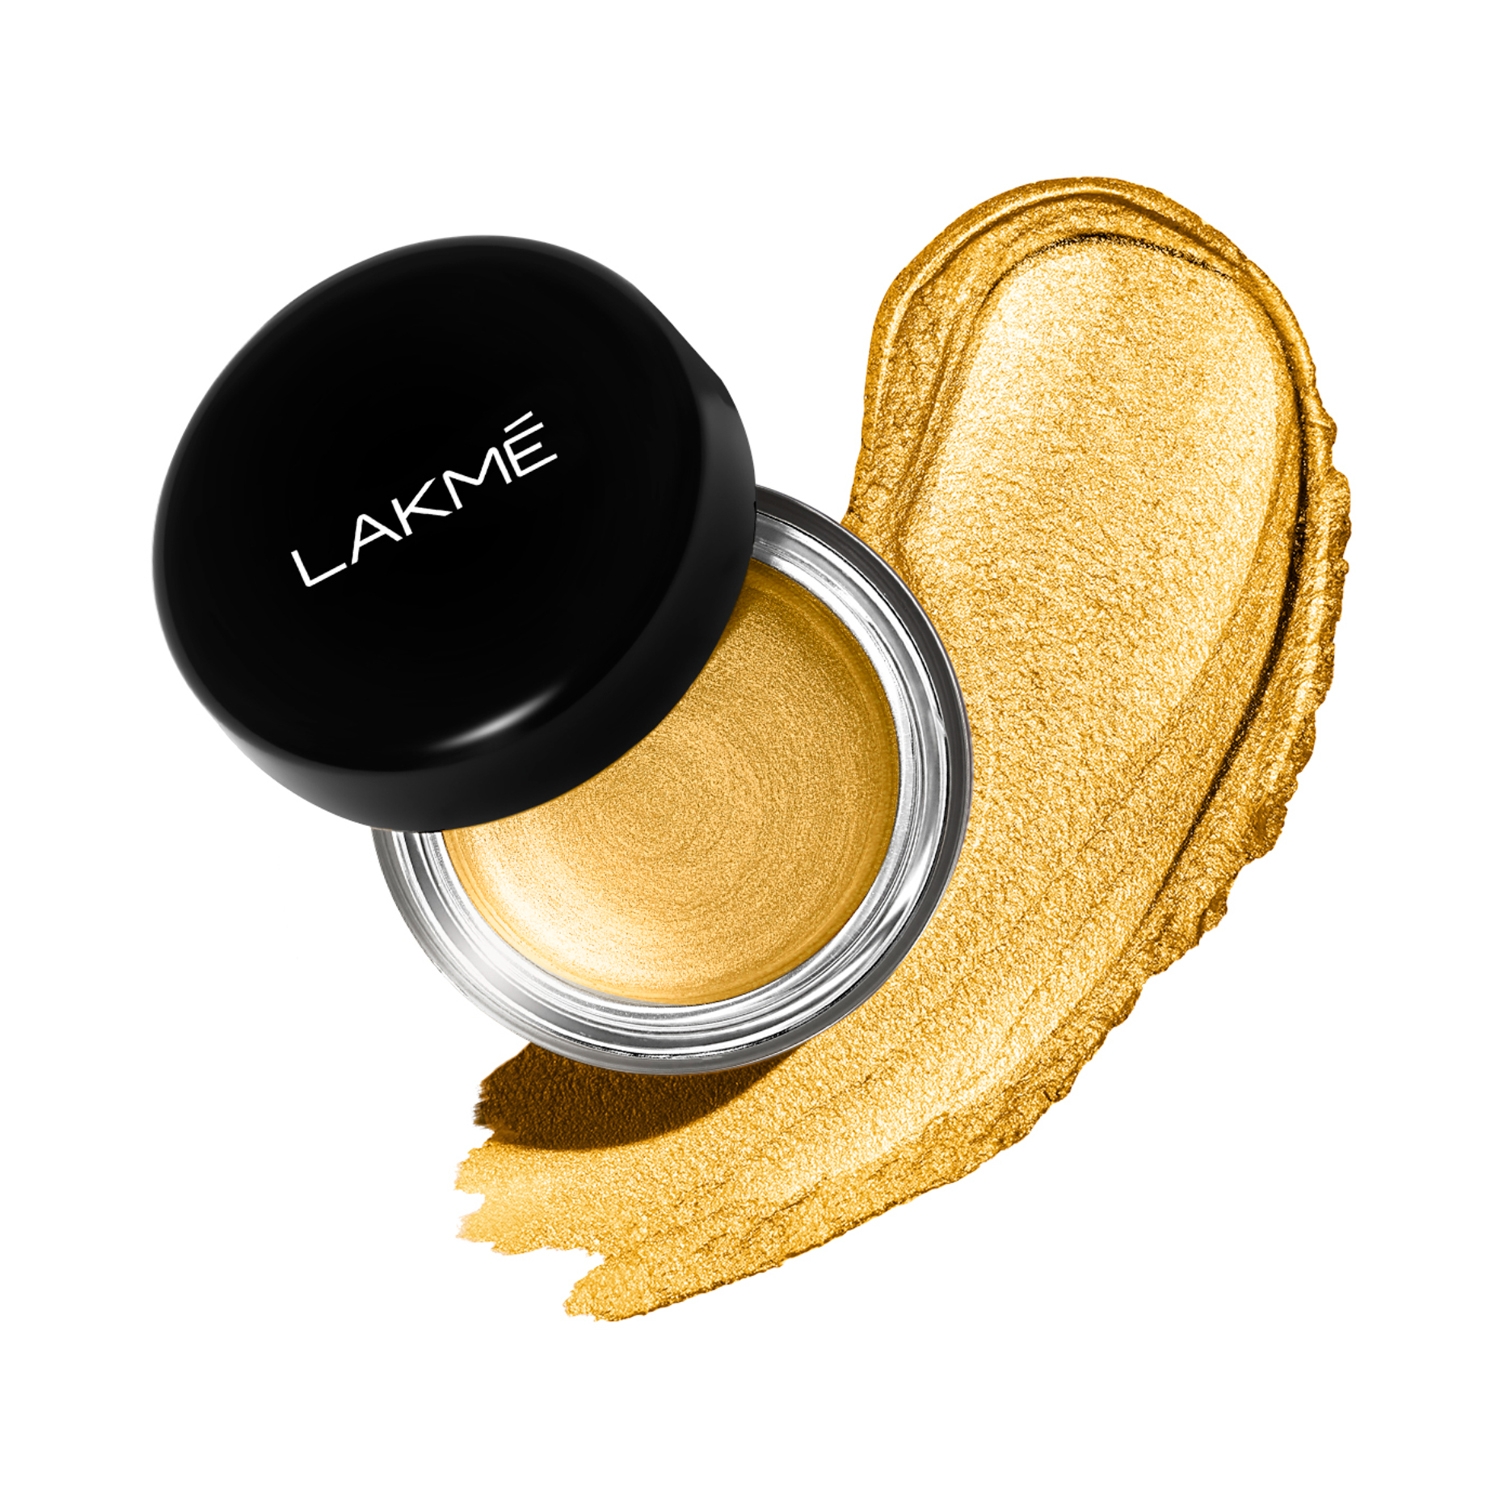 Lakme | Lakme Absolute Explore Eye Paint - Glittering Gold Dust (3g)